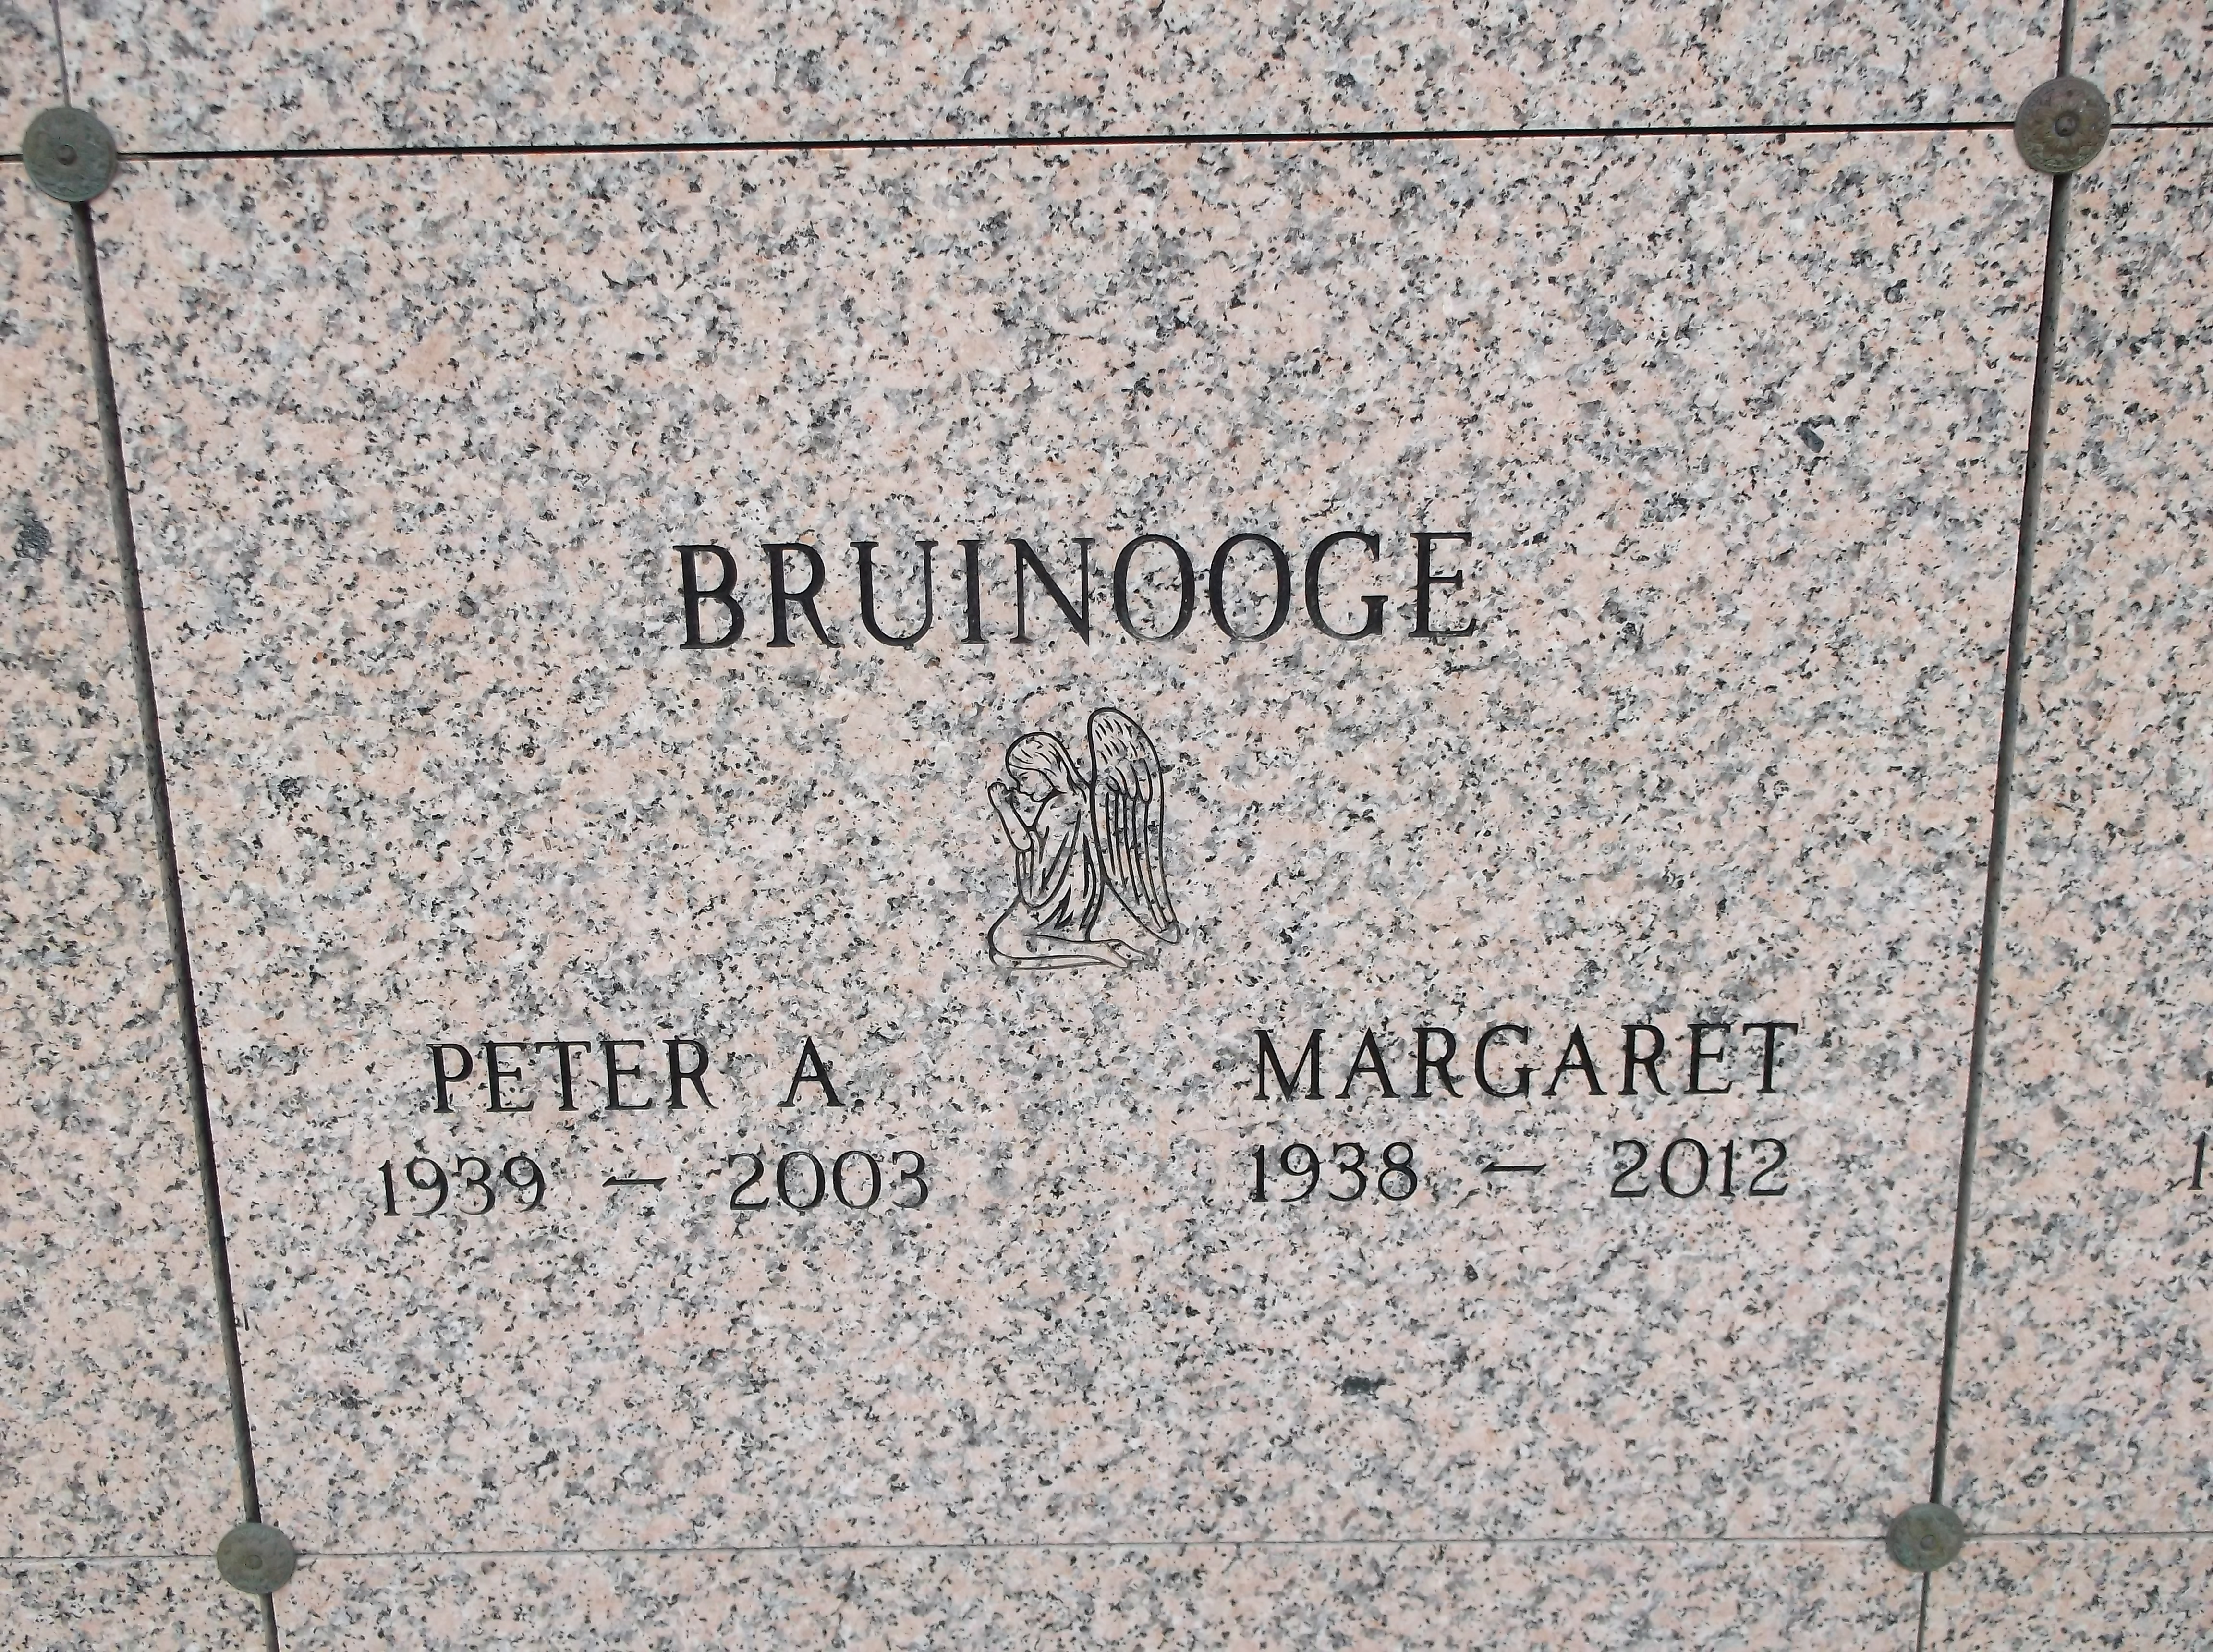 Peter A Bruinooge